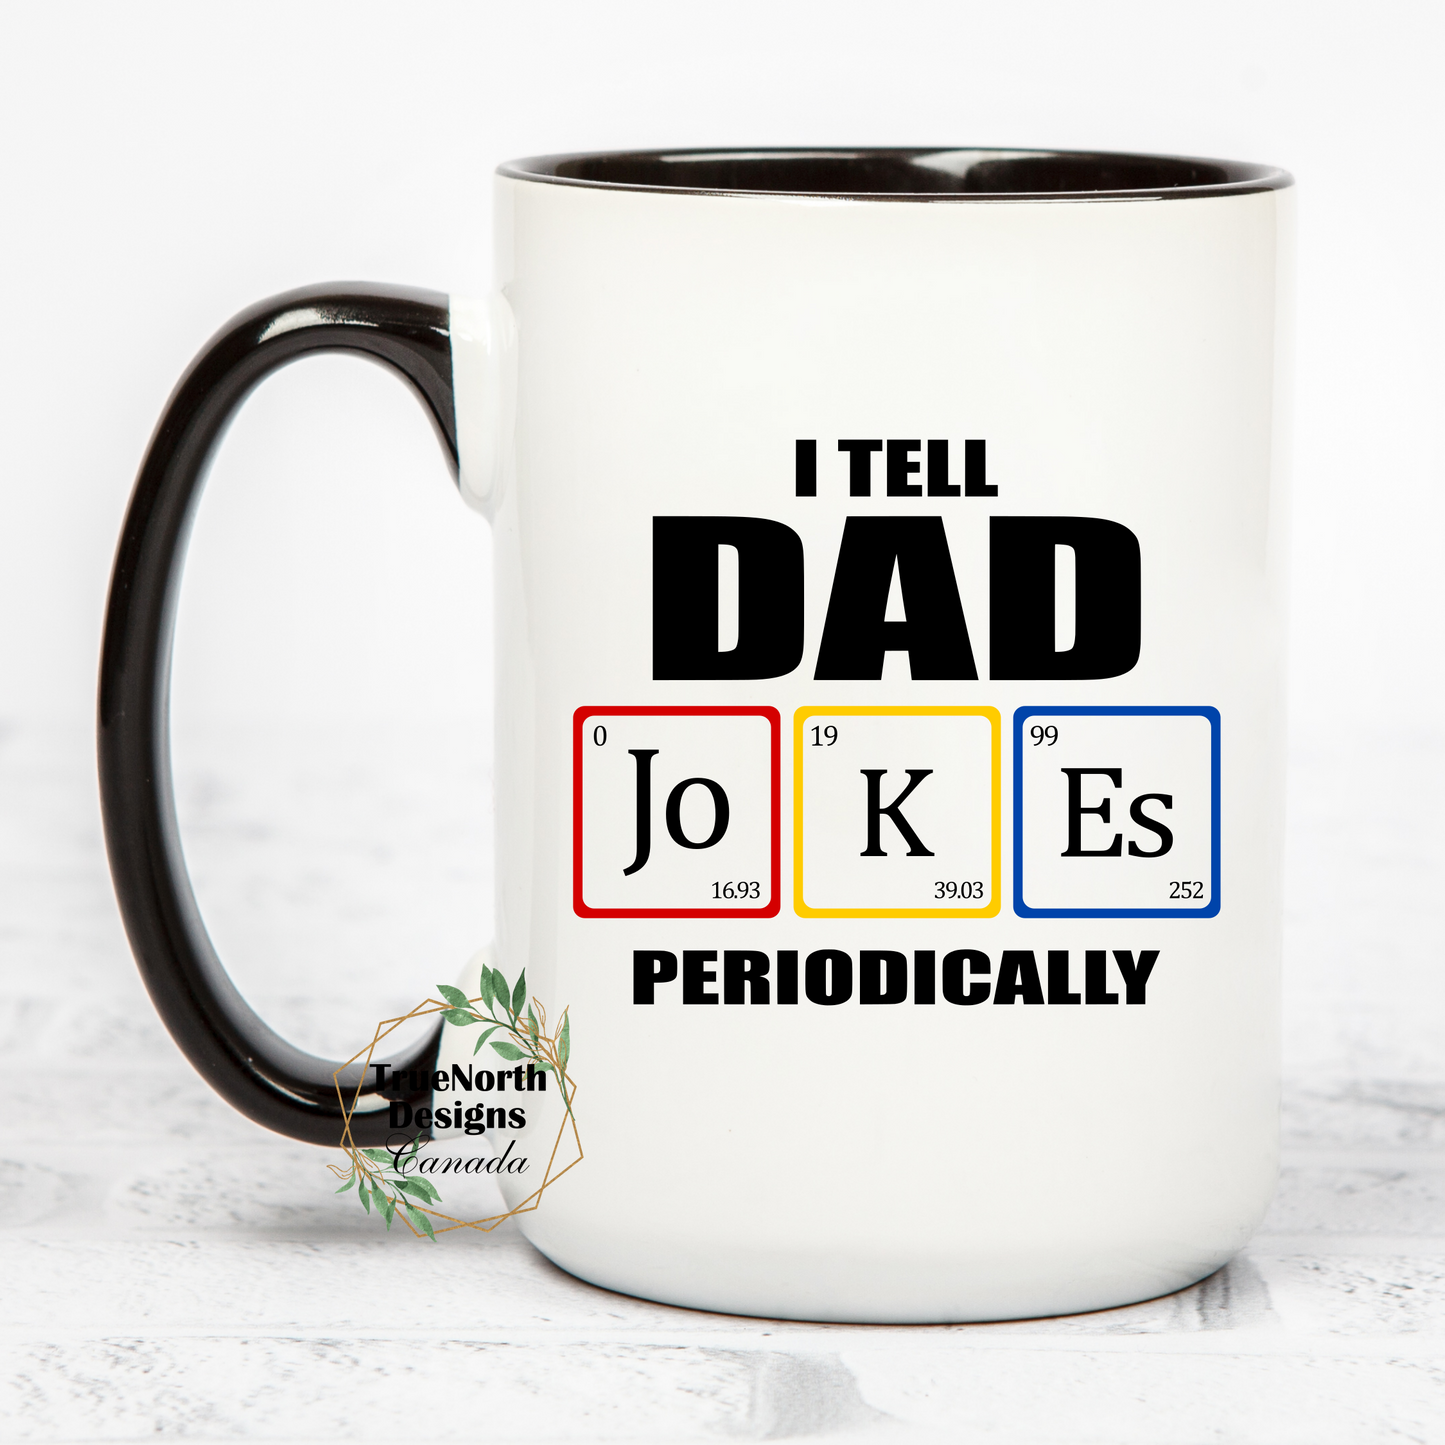 I Tell Dad Jokes Periodically Mug